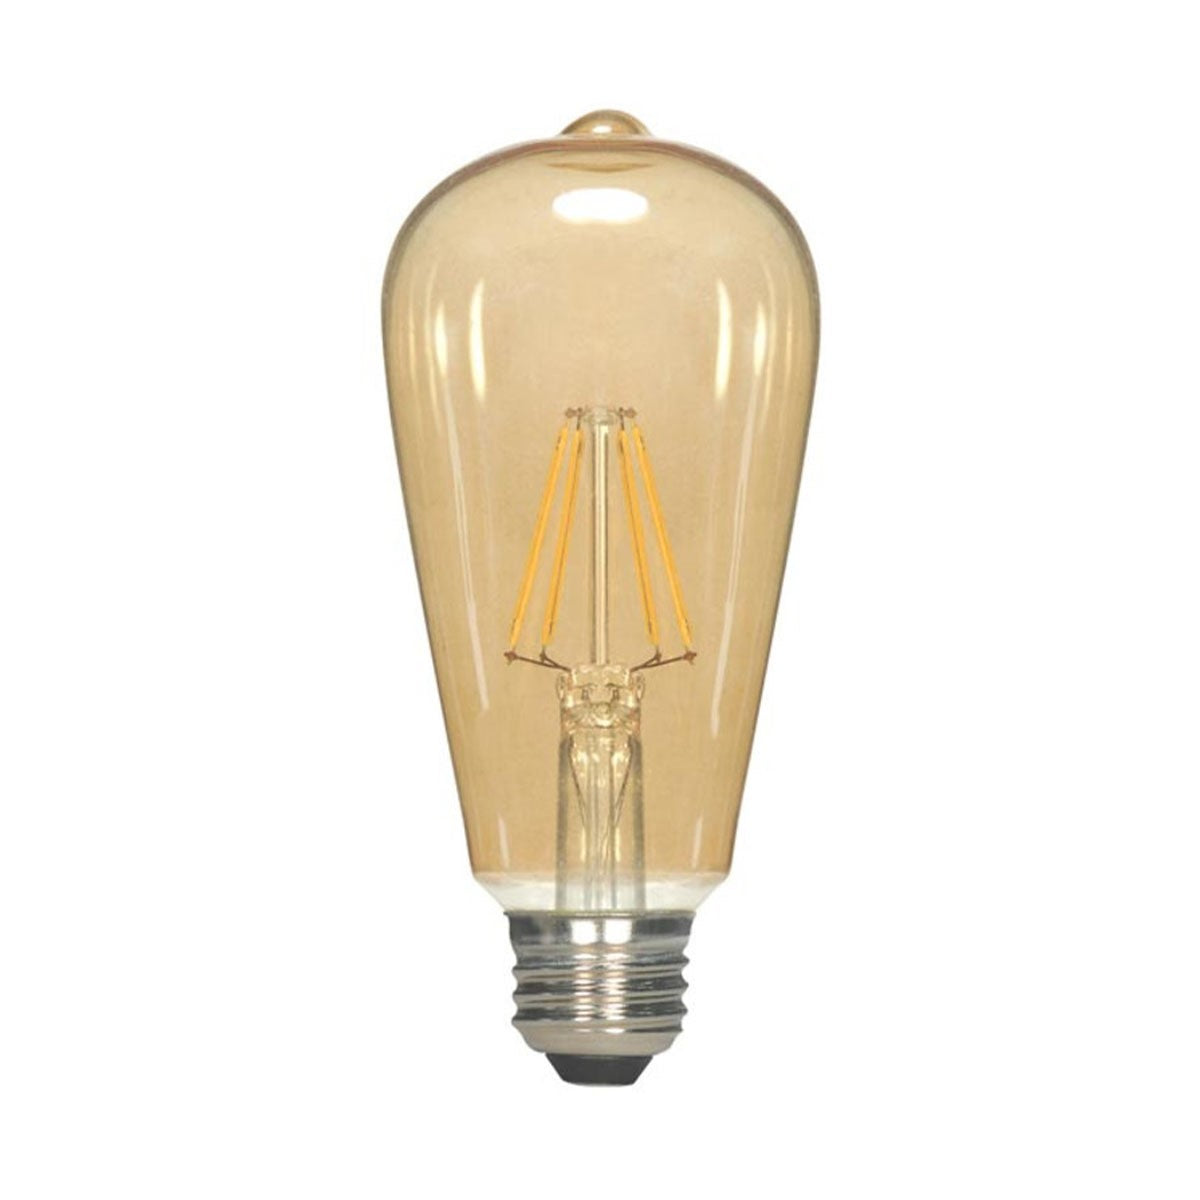 LED ST19 Straight Tapered Bulb, 7 Watt, 650 Lumens, 2000K, E26 Medium Base, Amber Finish